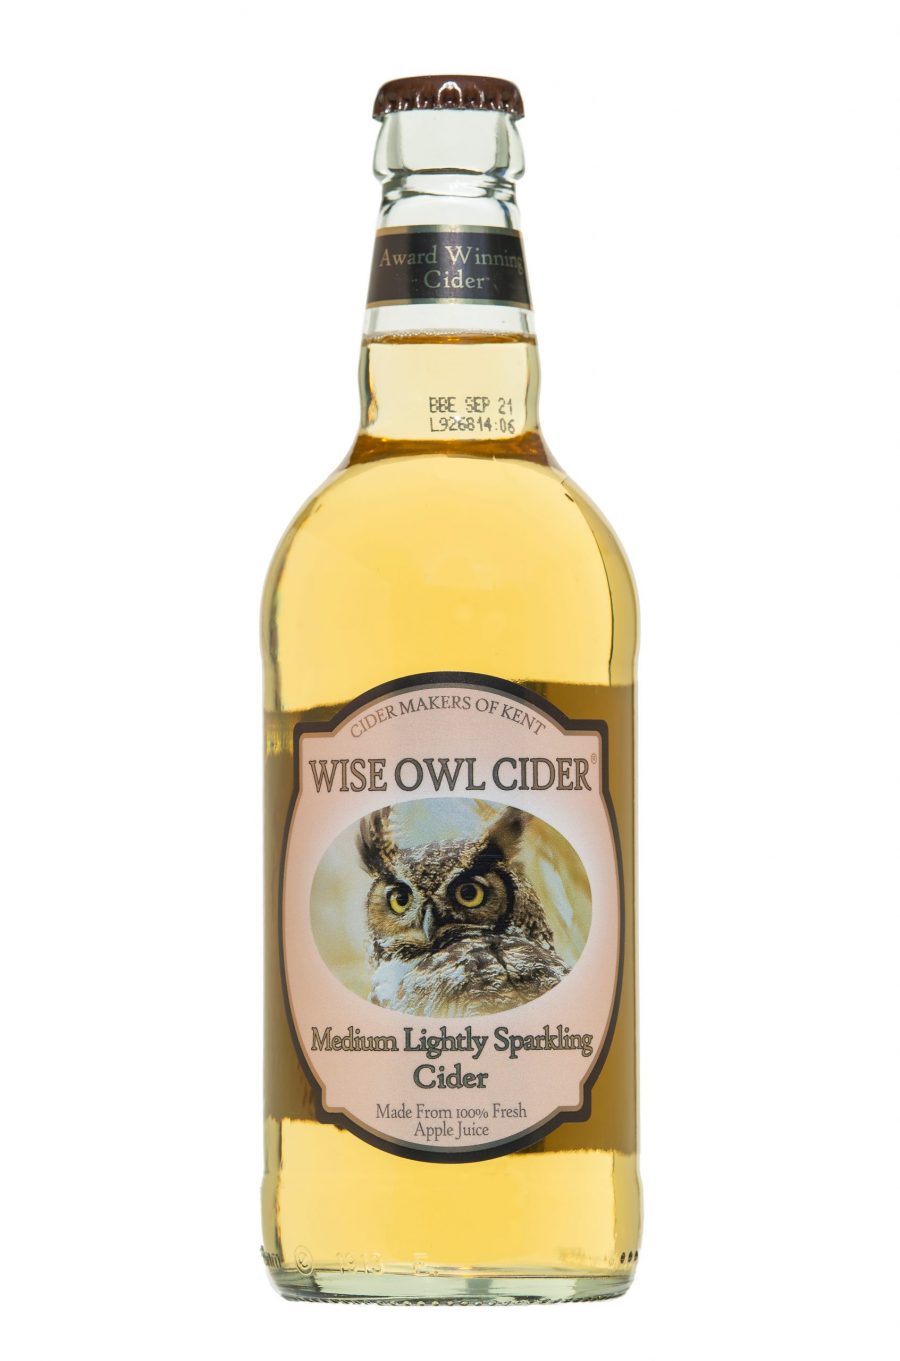 Wise Owl Ltd, Wise Owl cider, Kent cider, local cider, local cider delivery, award winning cider, cider, fruit cider, dry cider, medium cider, cider offers, sparkling cider, High Halden cider, cider delivery, award winning cider, best cider